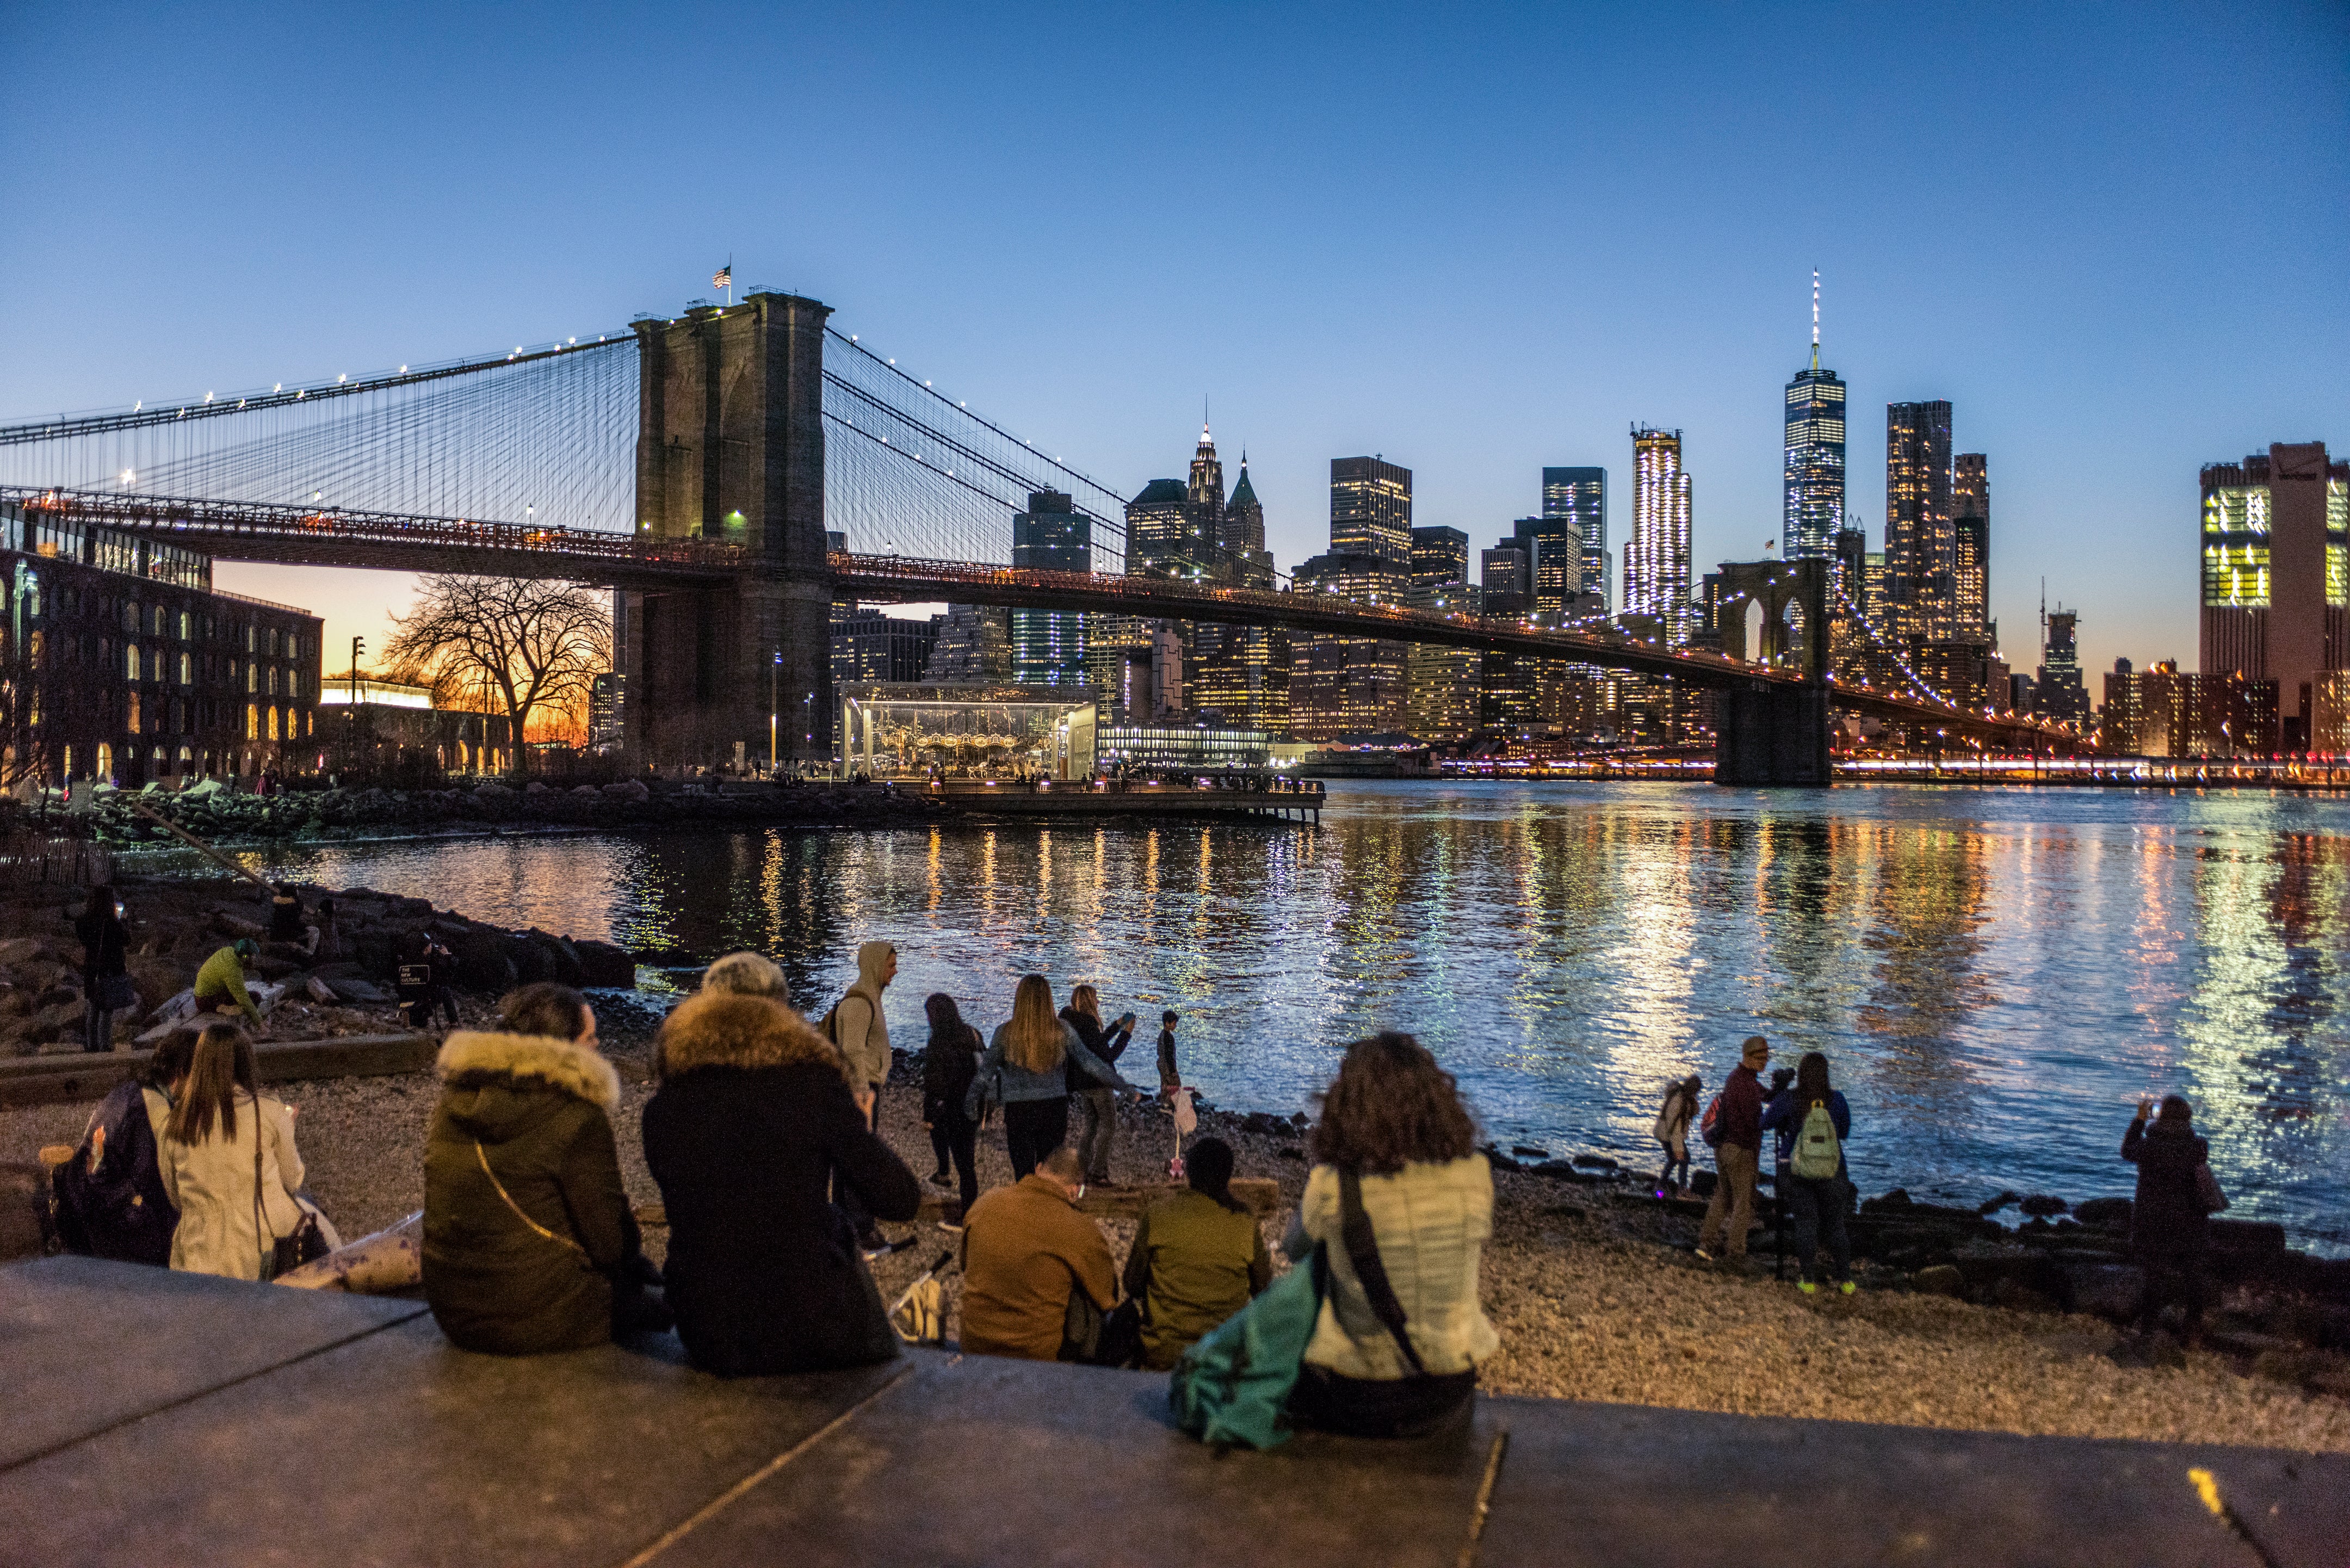 Brooklyn Bridge Park offers stellar views of Manhattan